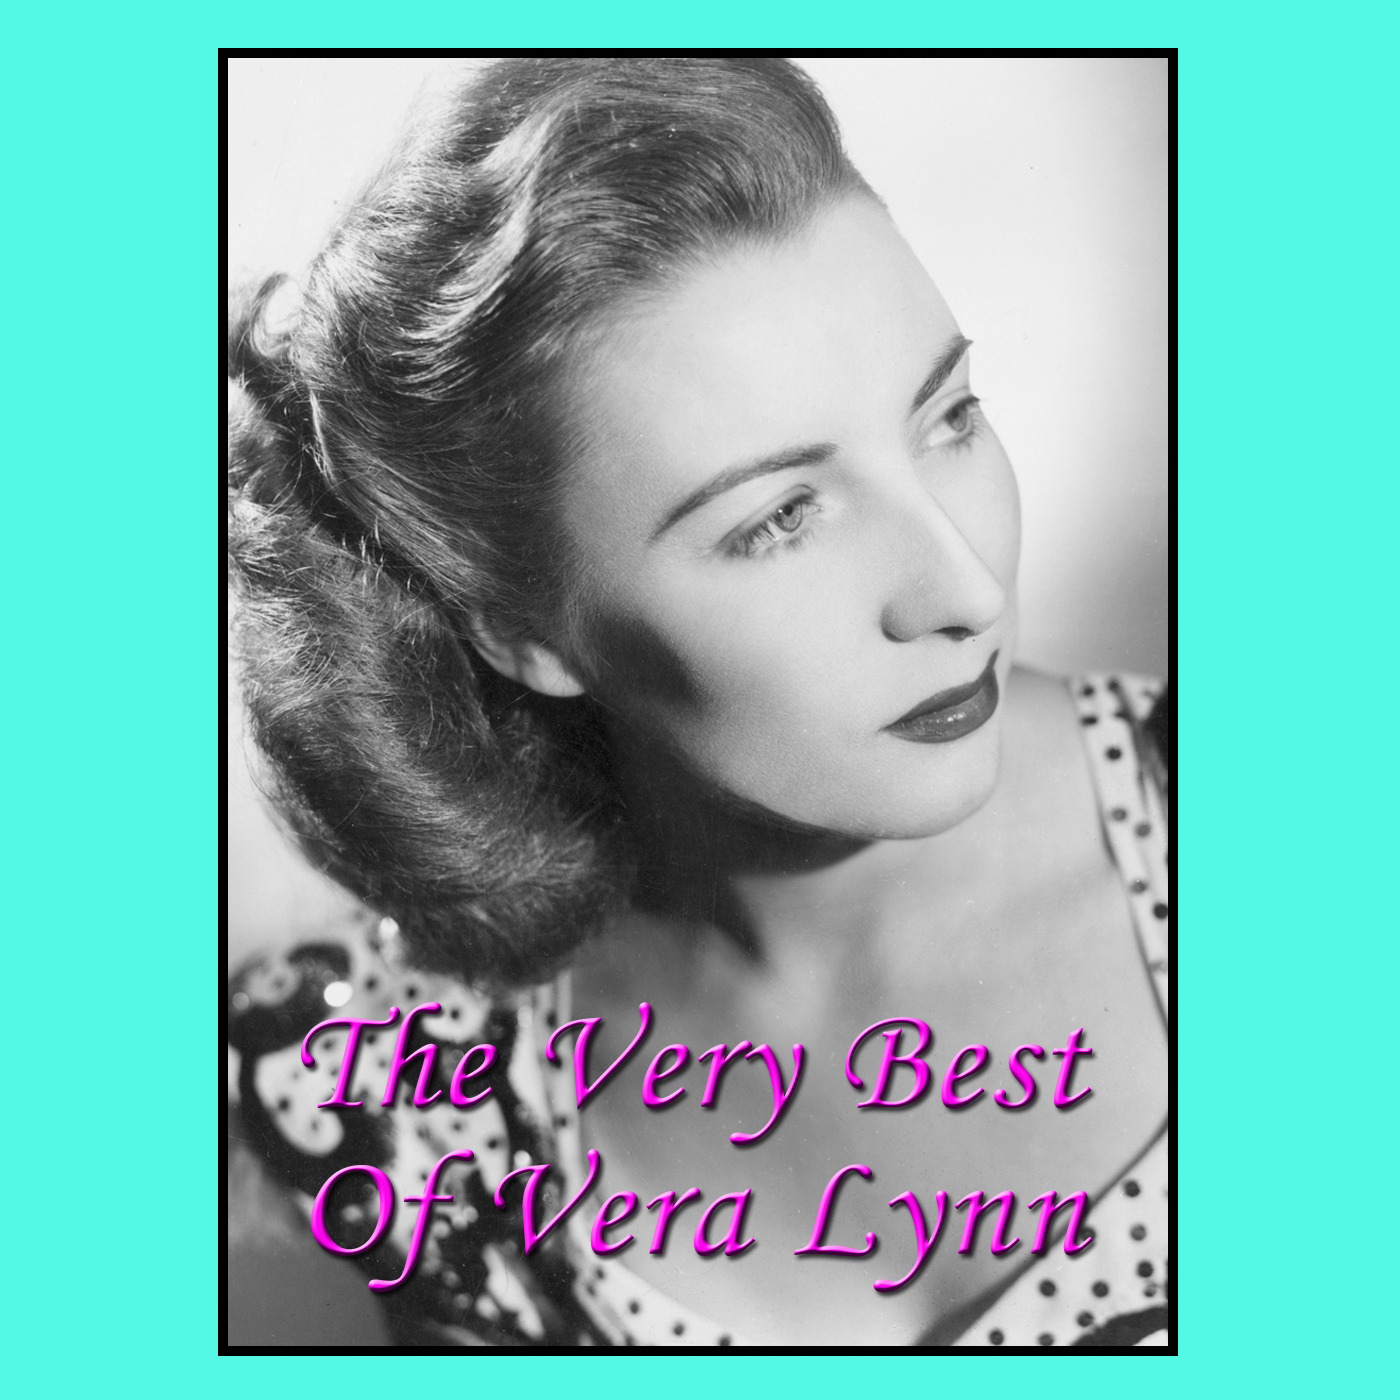 The Very Best of Vera Lynn